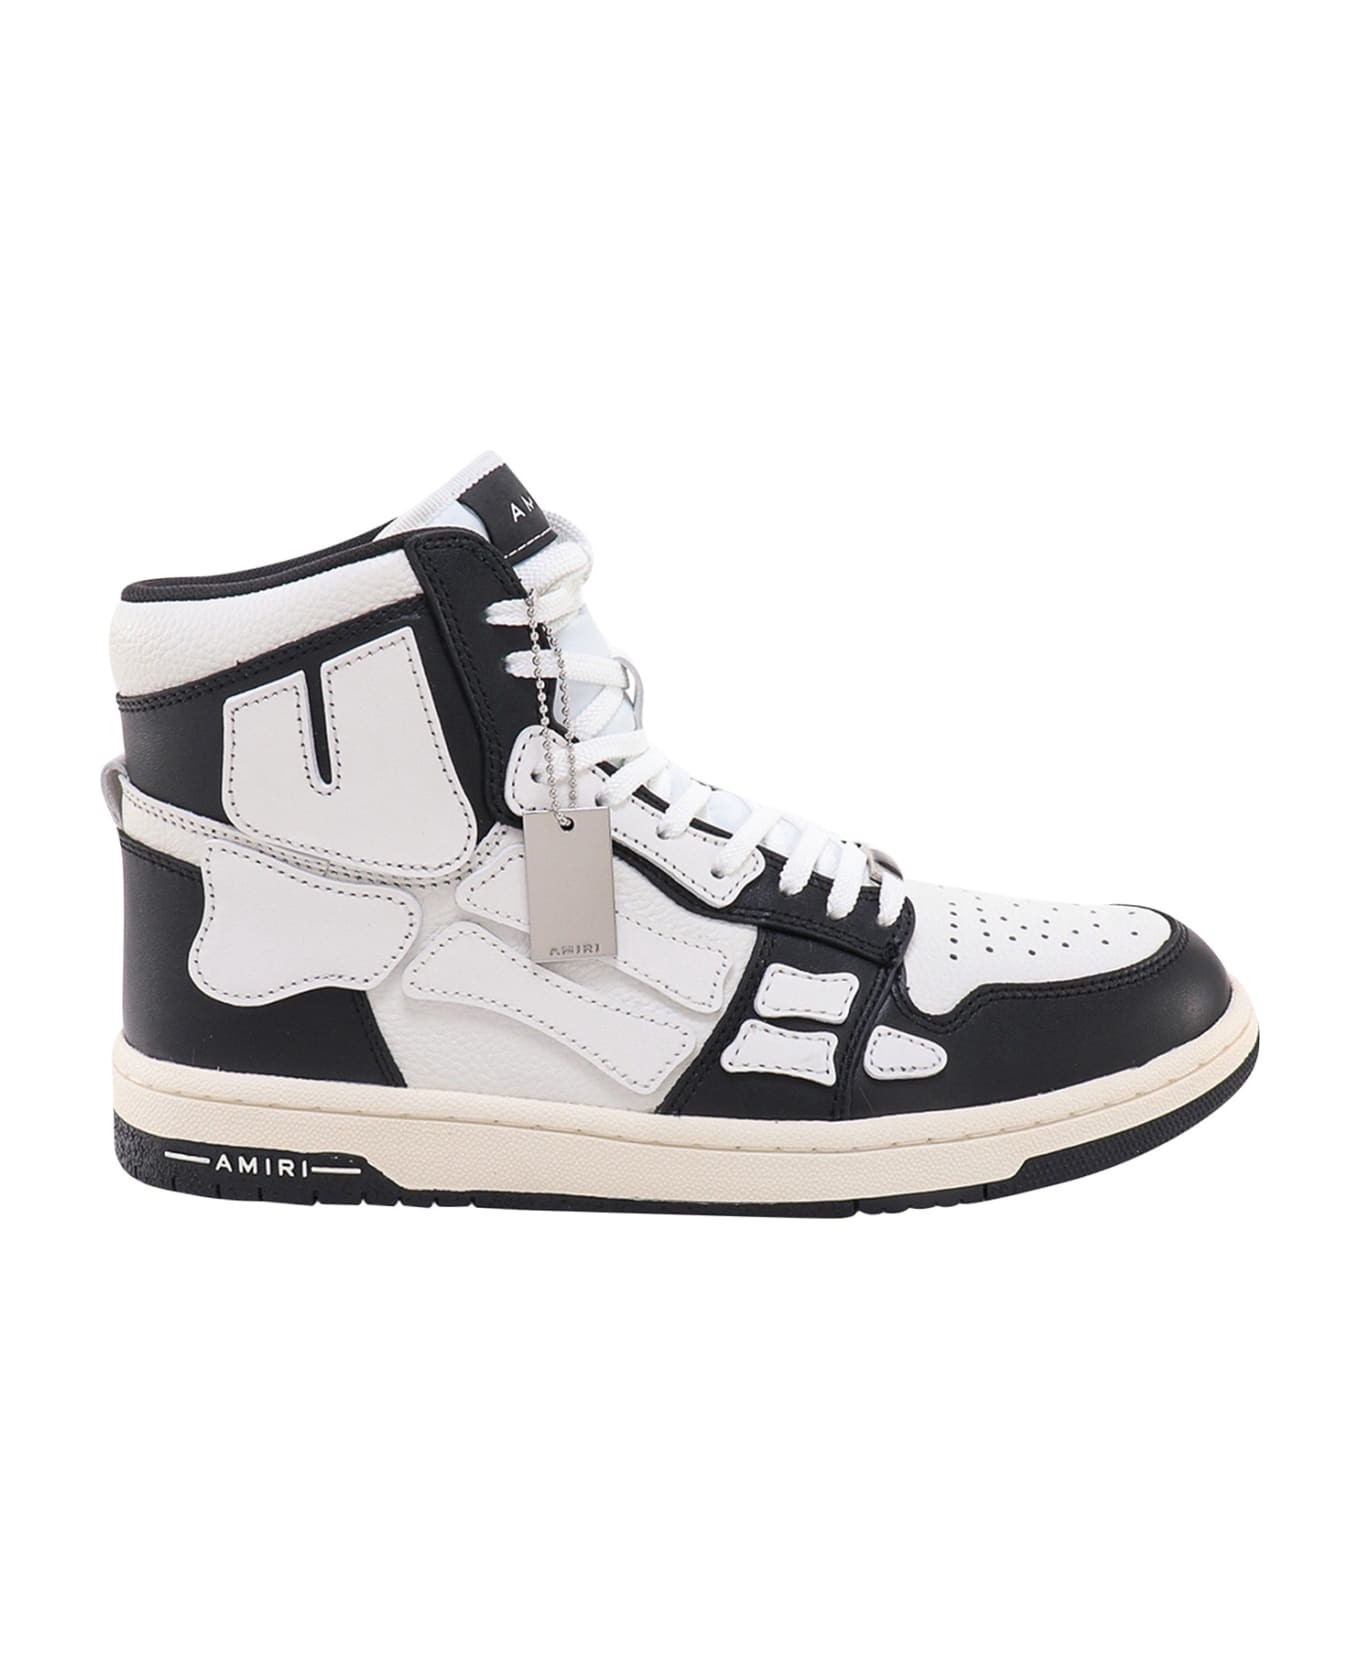 AMIRI Sneakers - BLACK/WHITE